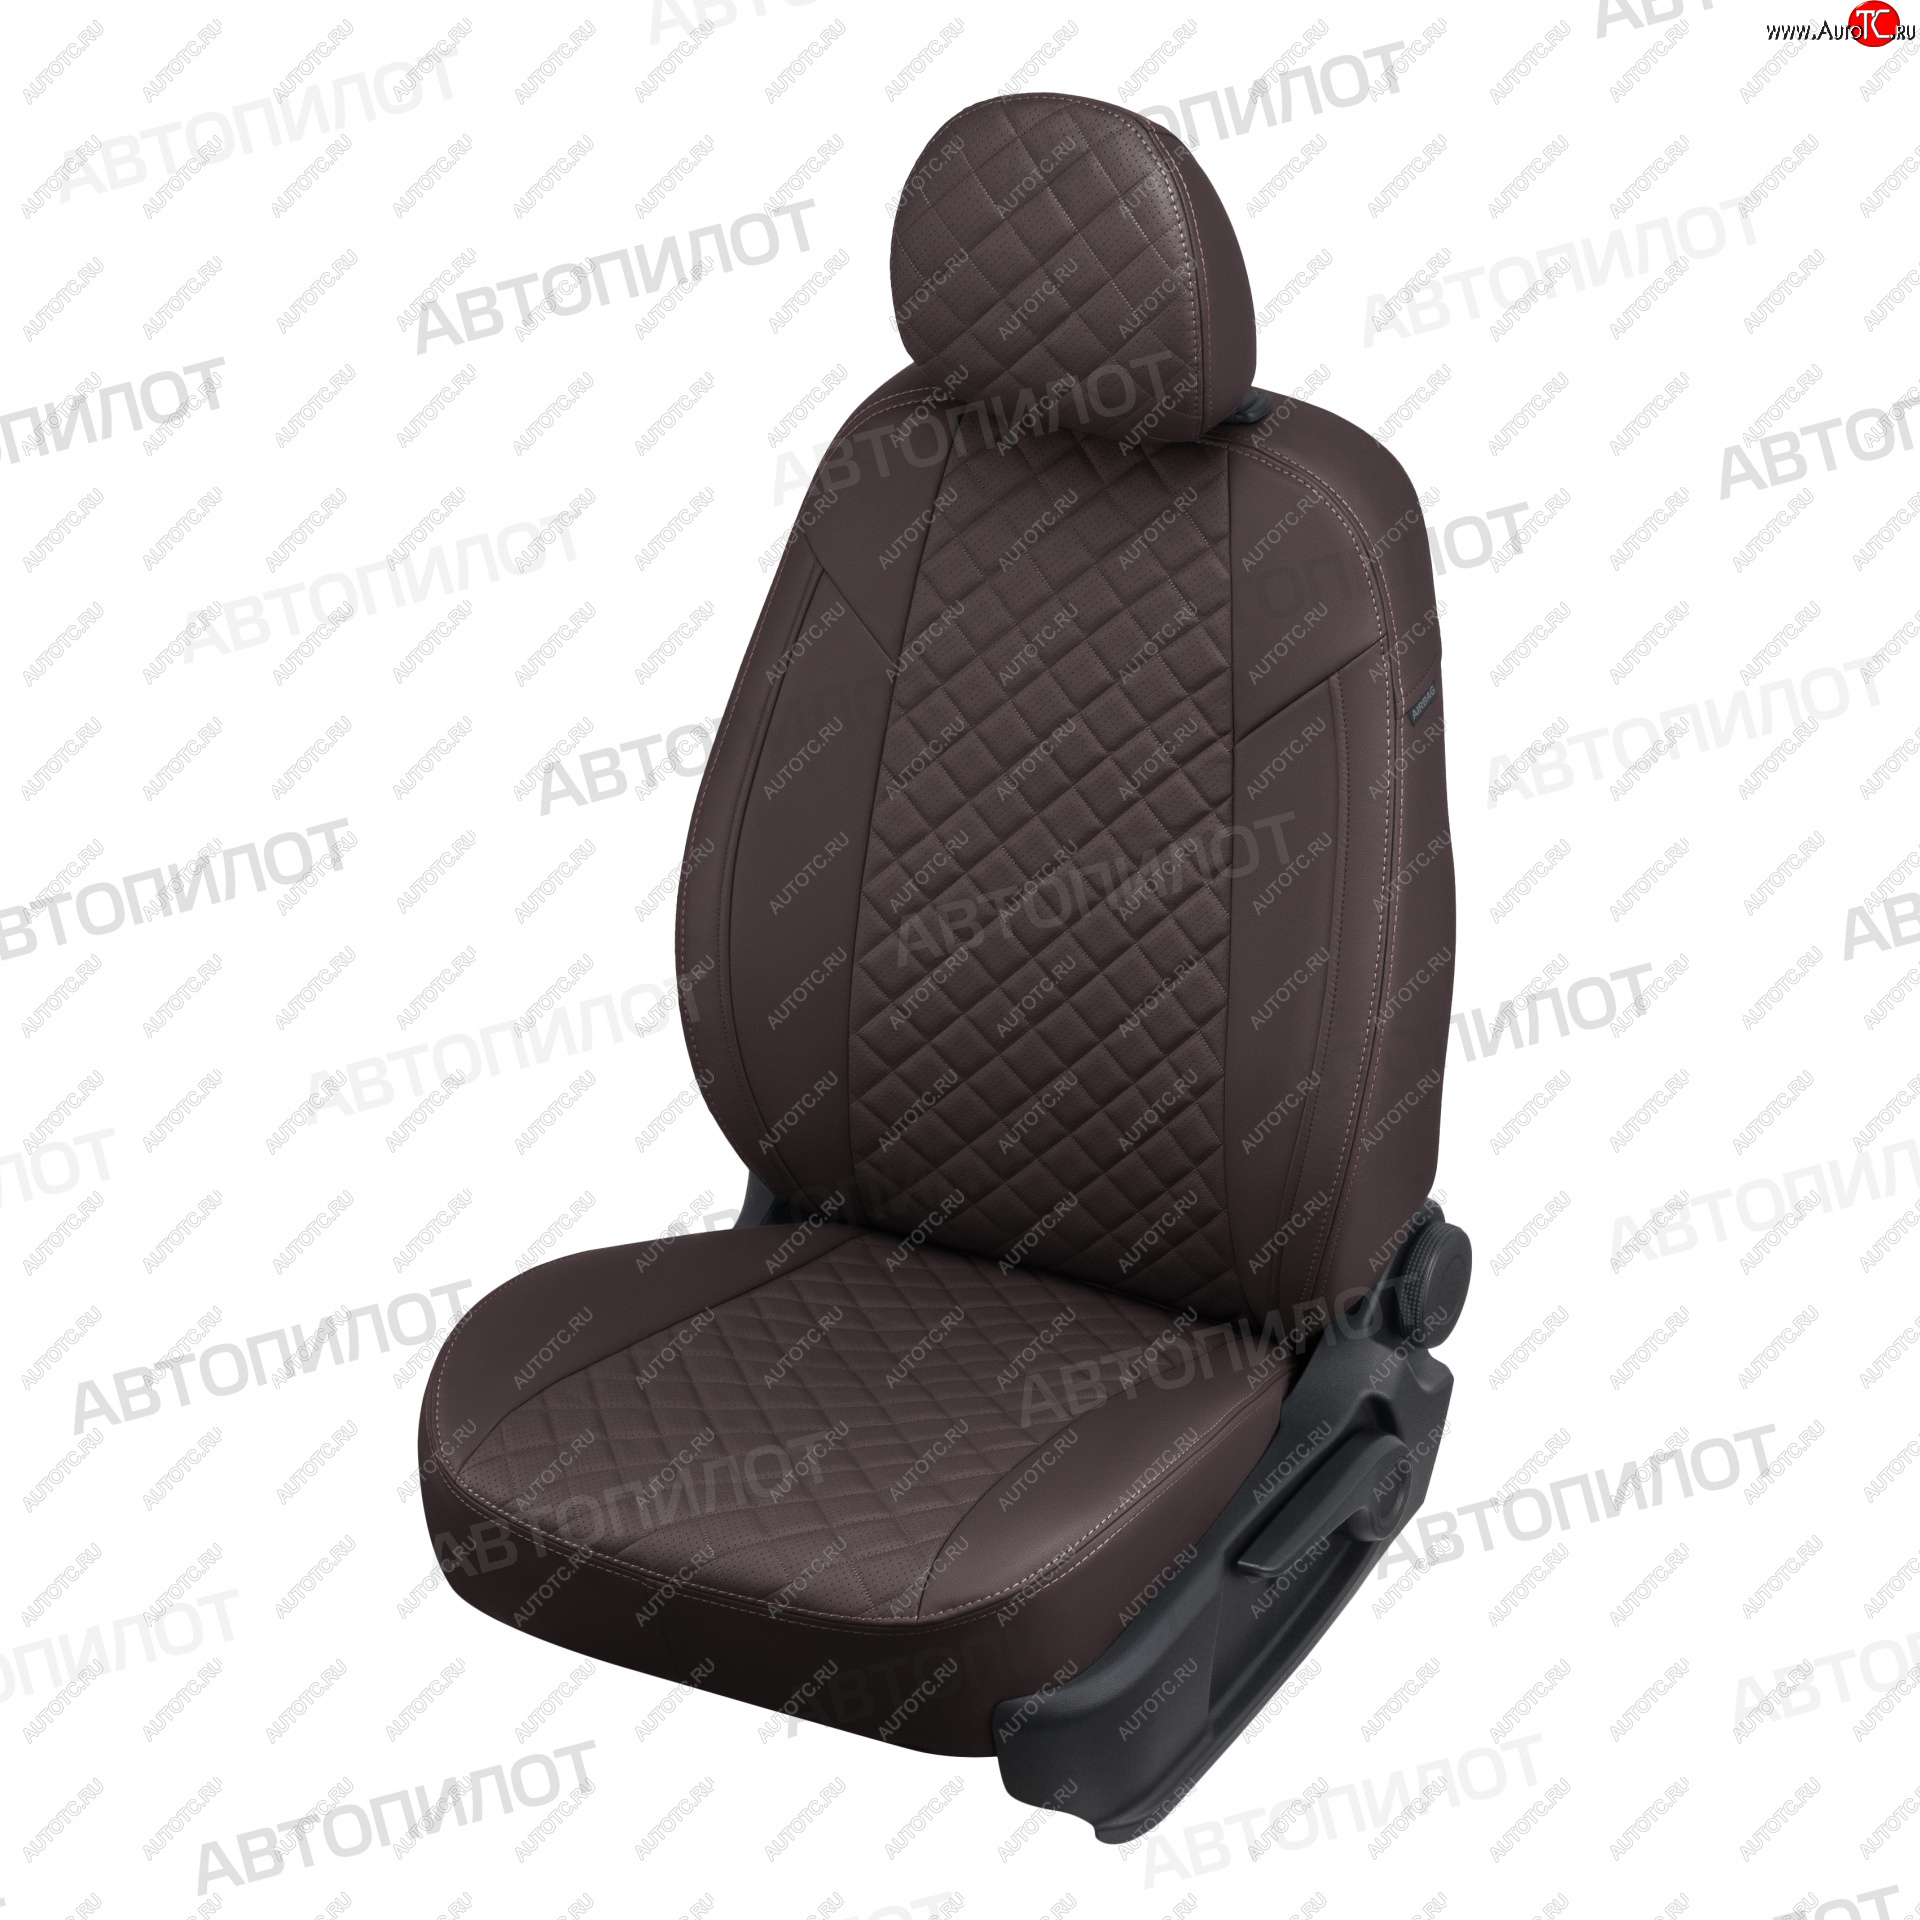 13 999 р. Чехлы сидений (экокожа) Автопилот Ромб  Ford Fiesta  5 (2001-2008) (шоколад)